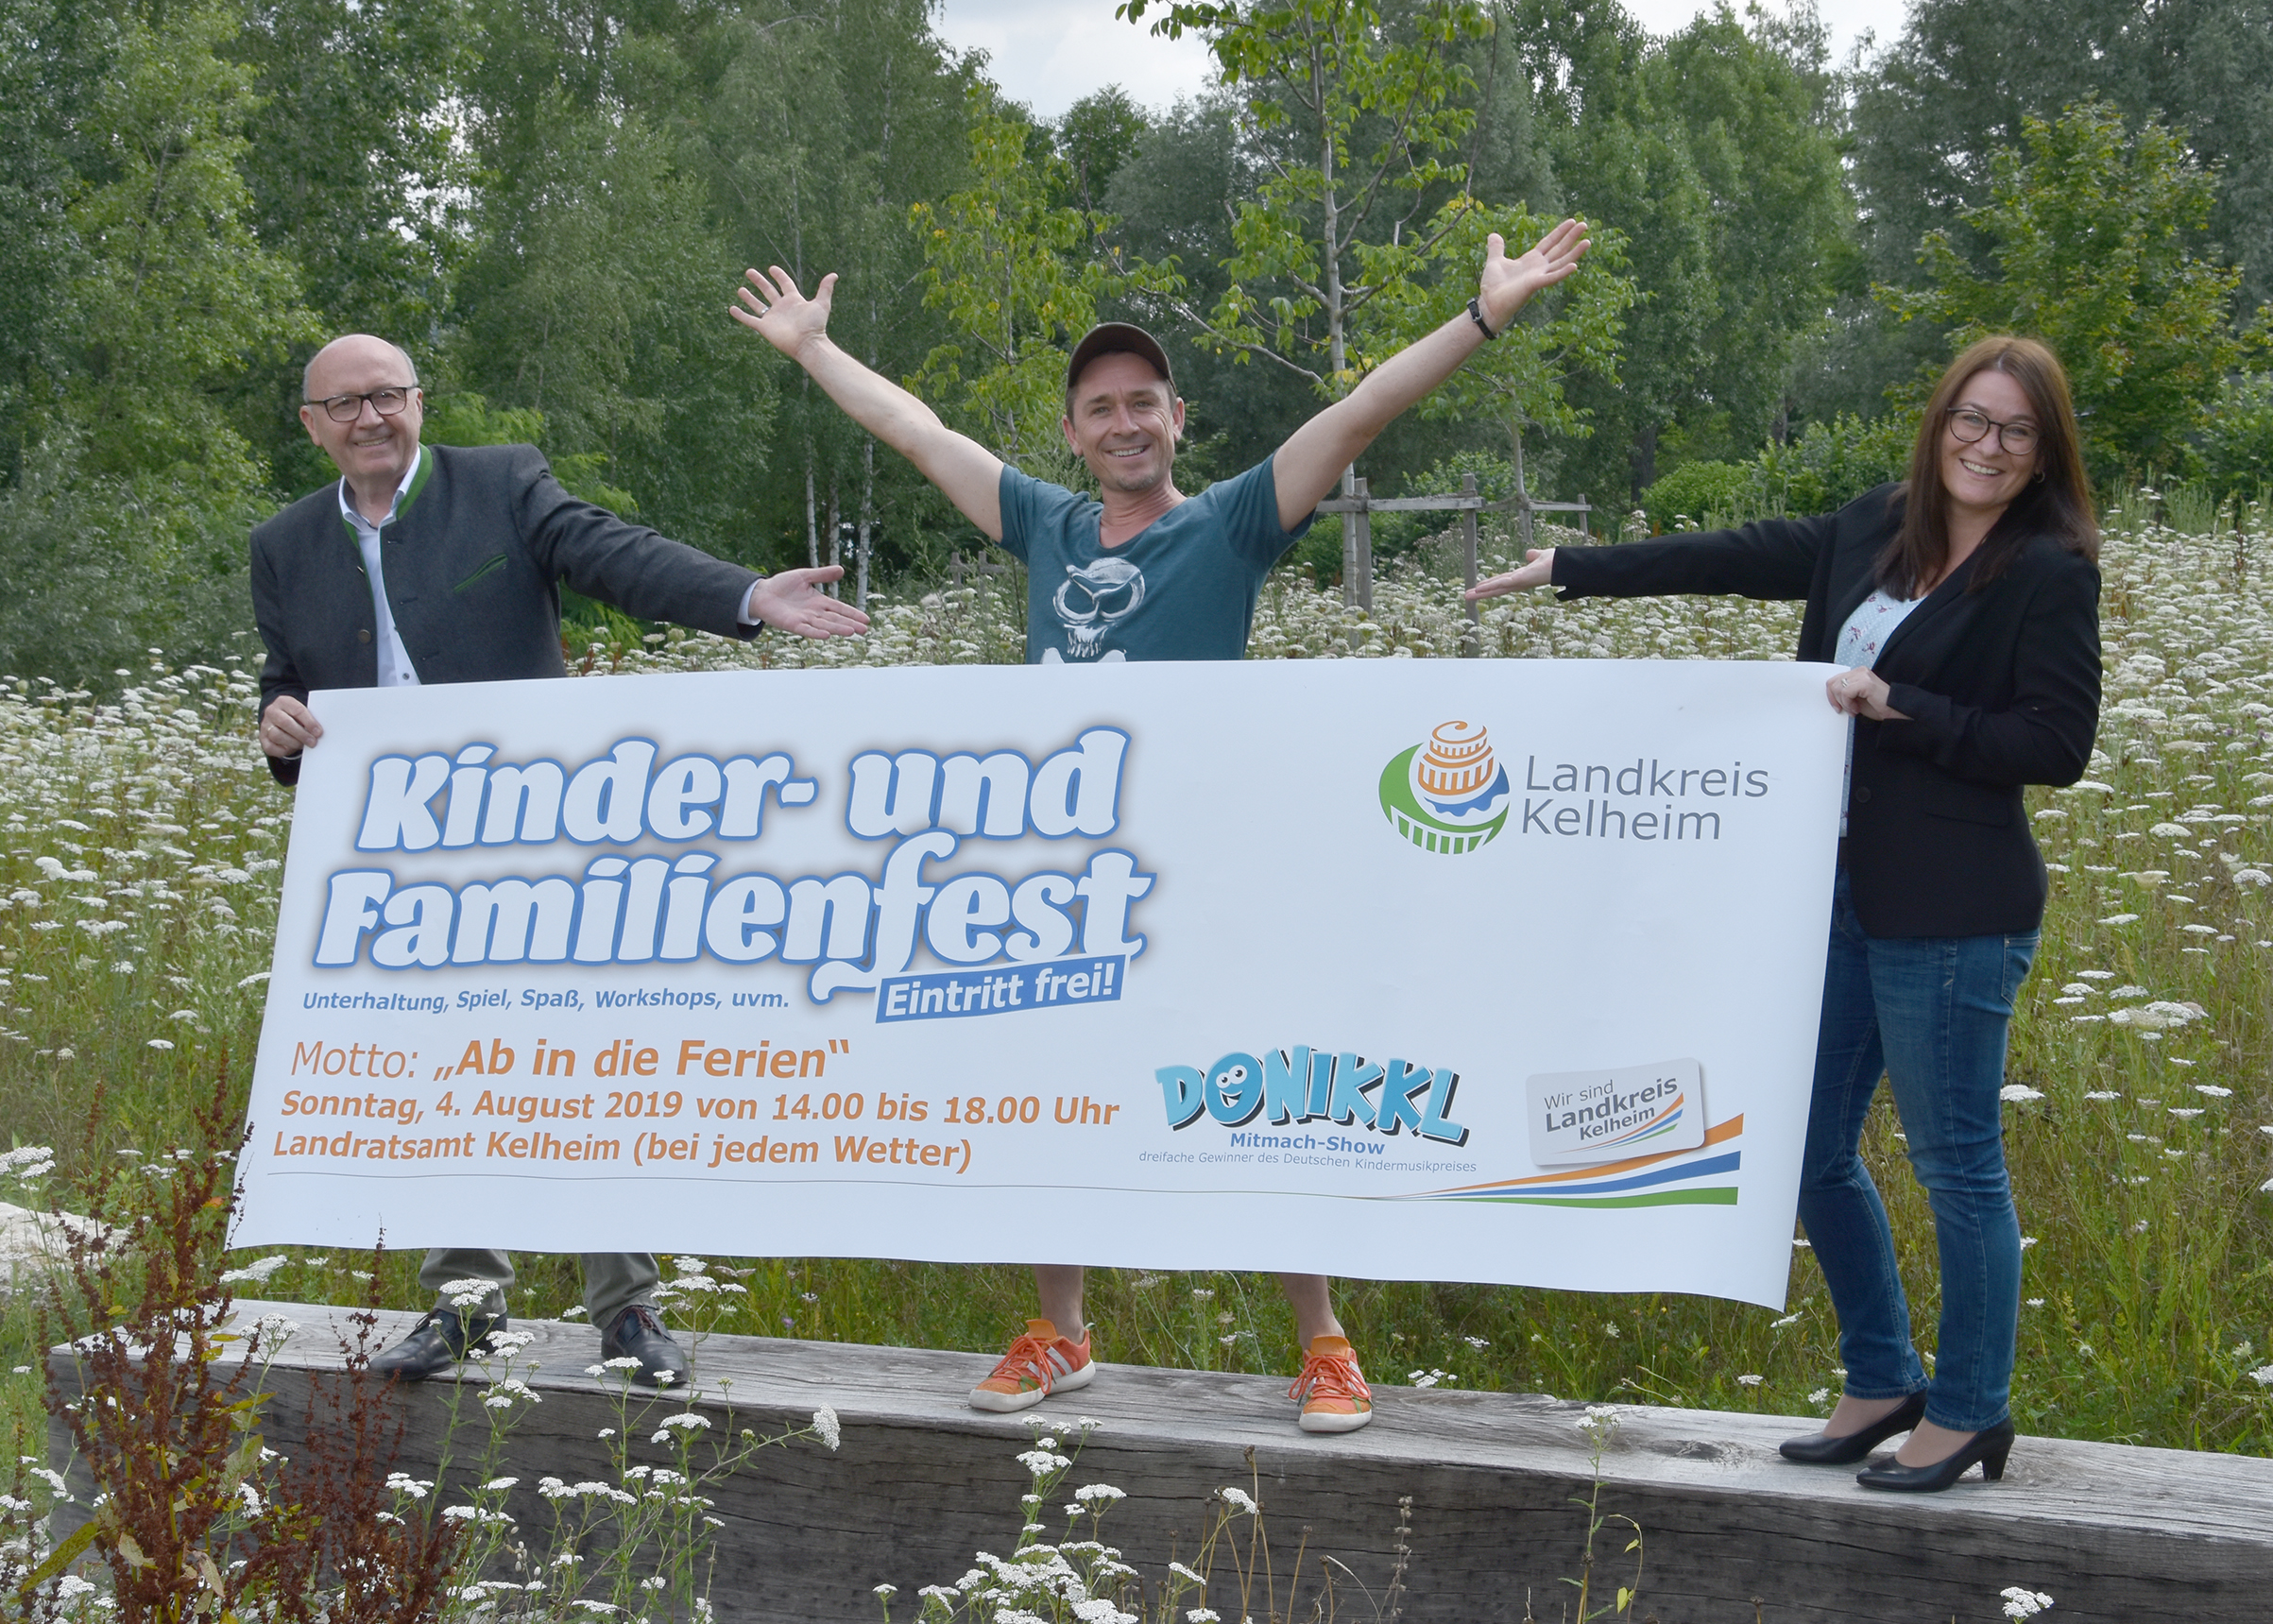 Foto v.l.n.r.: Landrat Martin Neumeyer, DONIKKL und Kerstin Kandlbinder, Kreisjugendpflegerin.